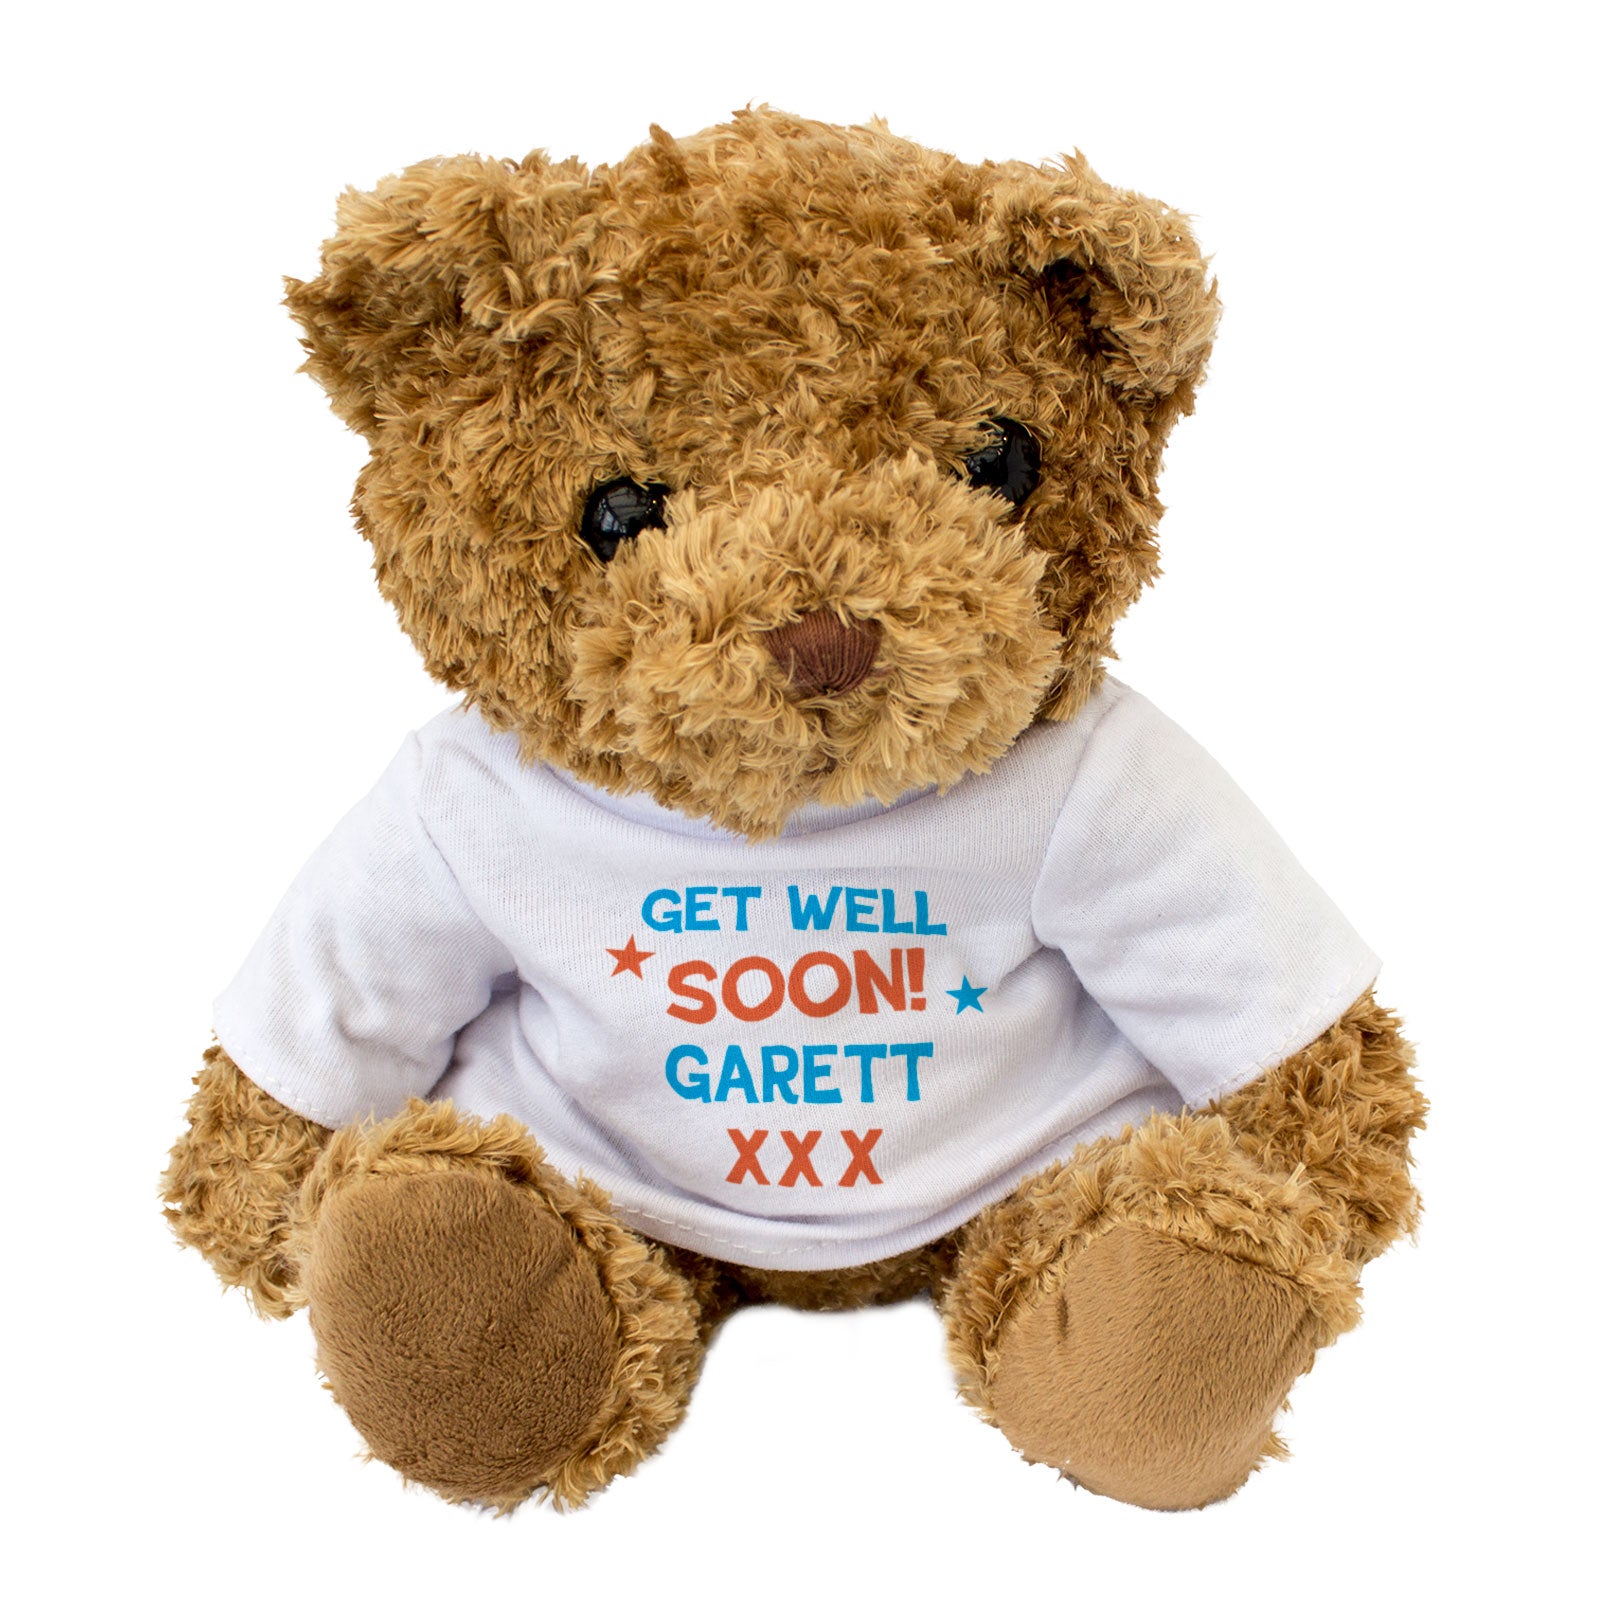 Get Well Soon Garett - Teddy Bear